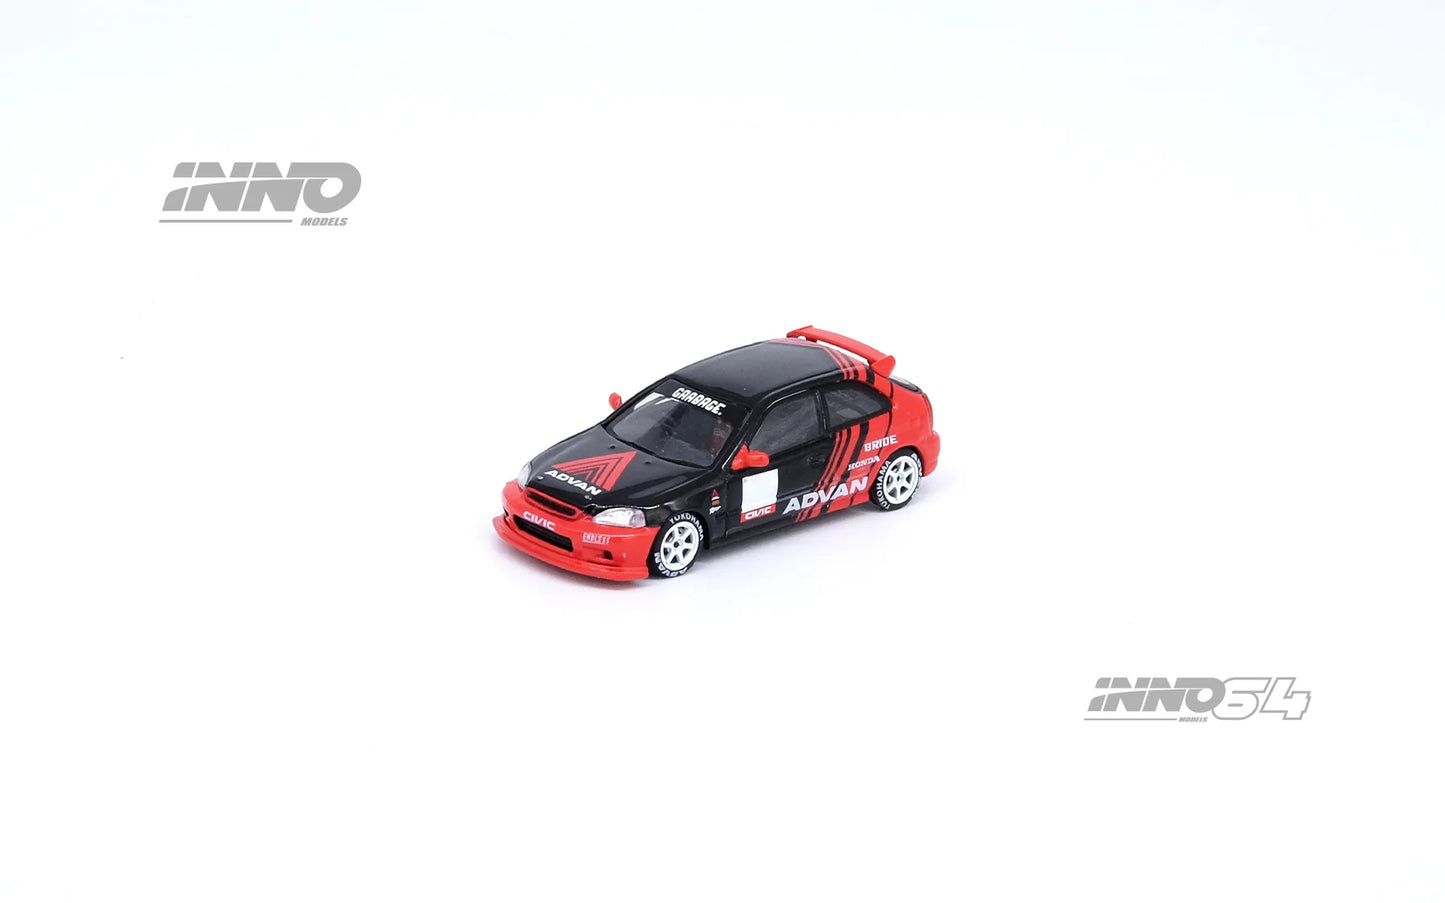 Inno Models Inno64 Hond Civic Type-R EK9 ADVAN Livery (Red & Black)